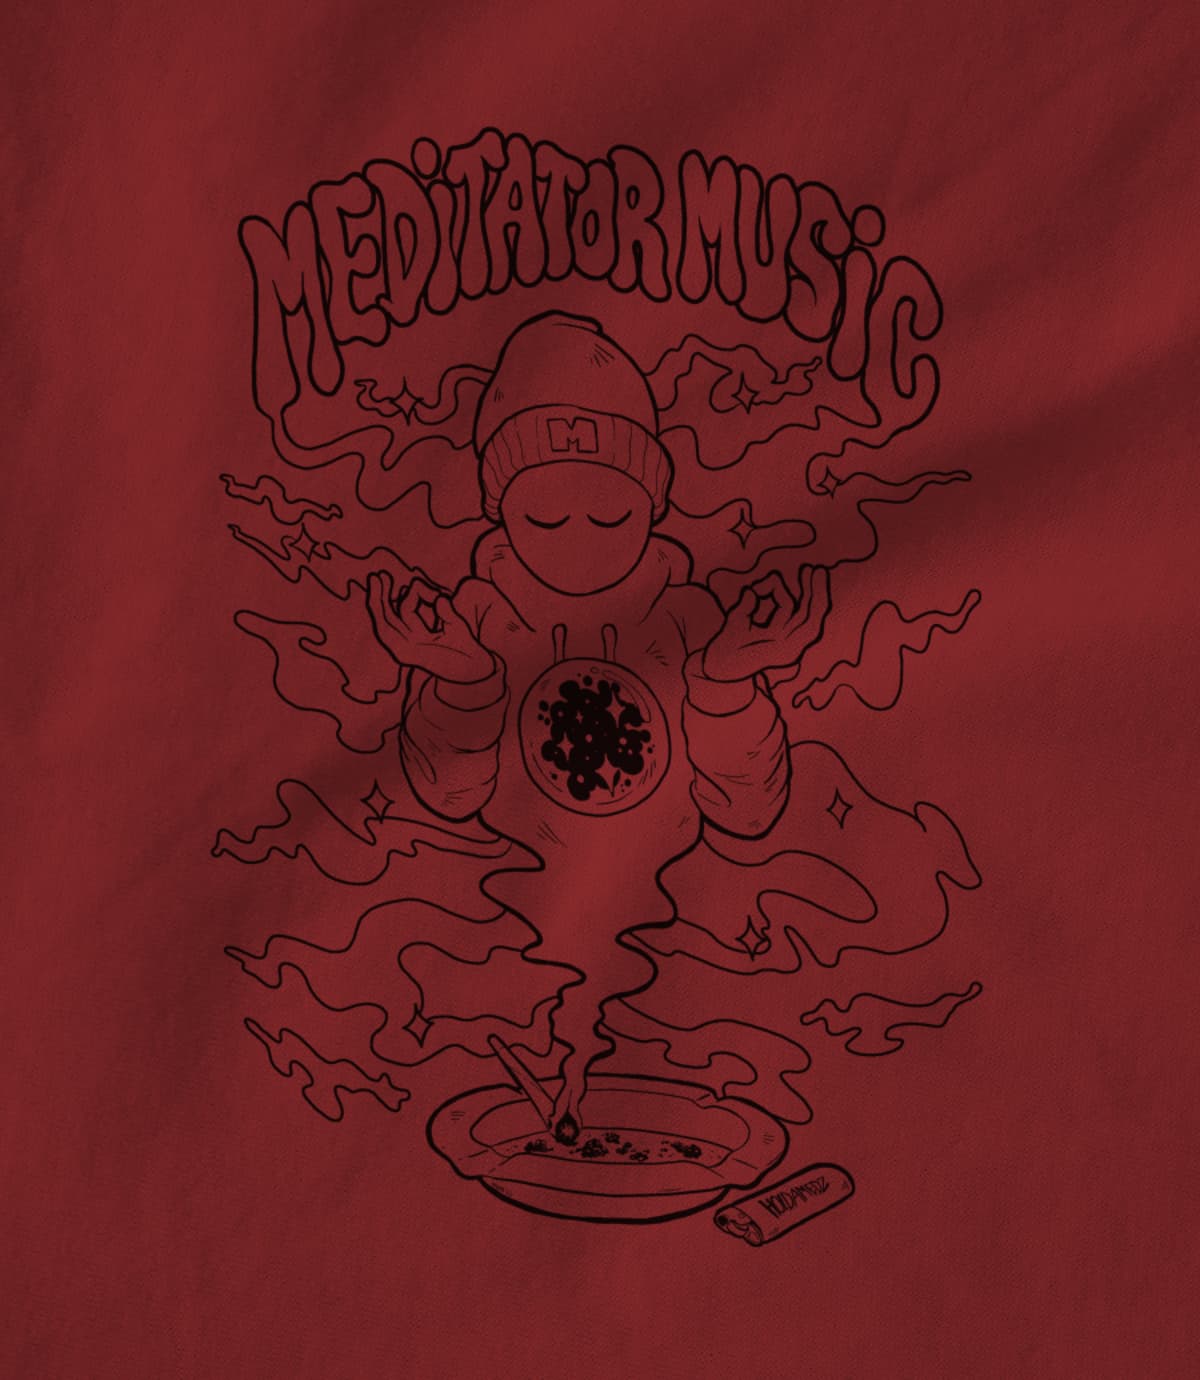 Meditator music medi smoke tee  1 1641940849